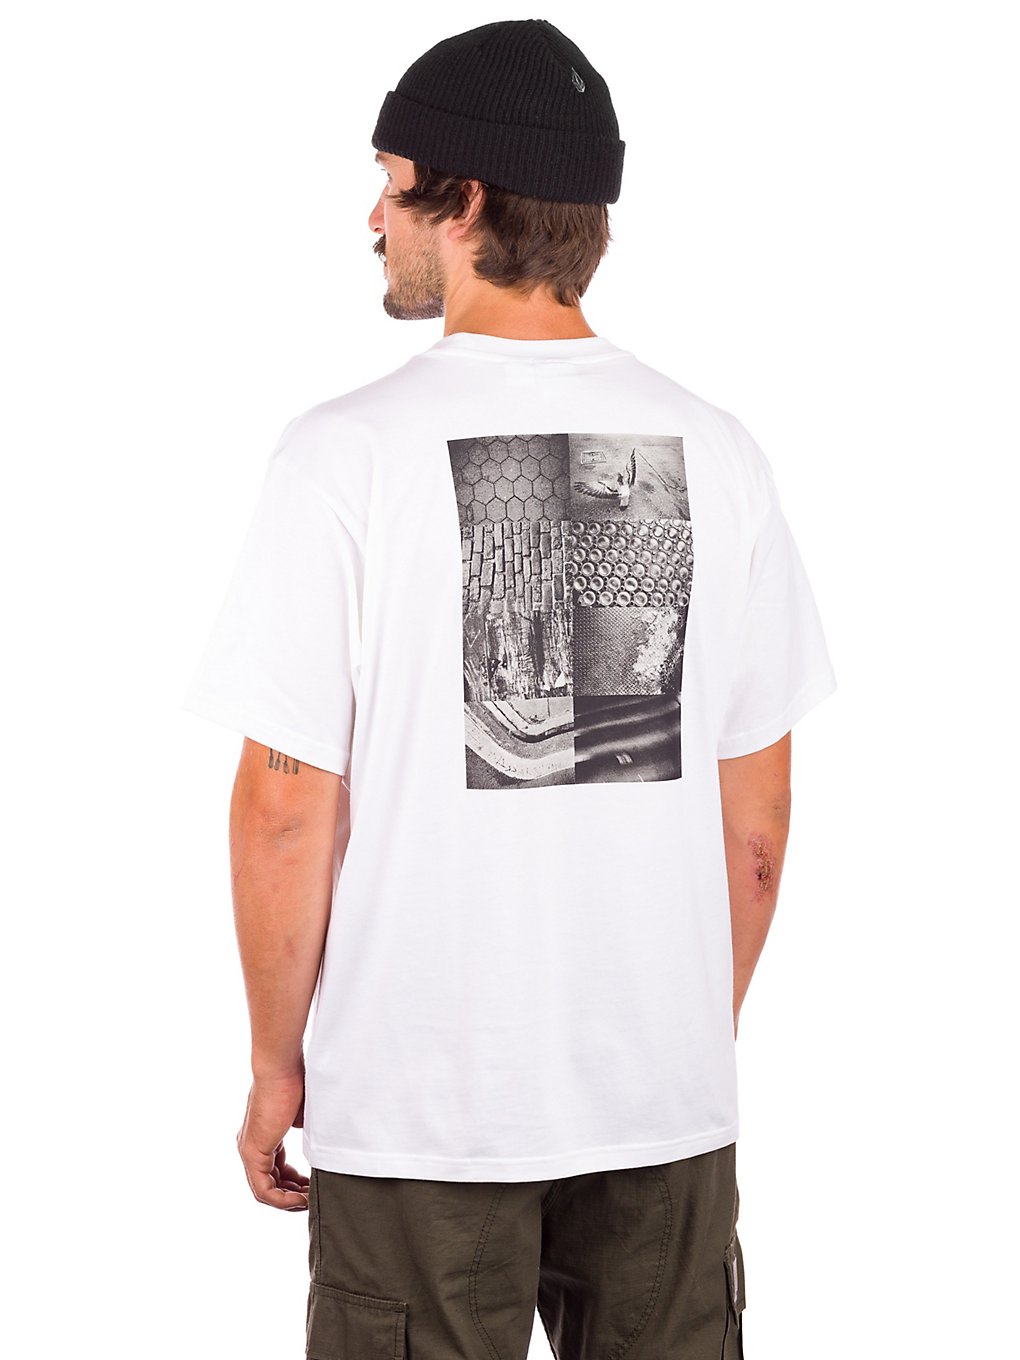 adidas Skateboarding Zander G T-Shirt white